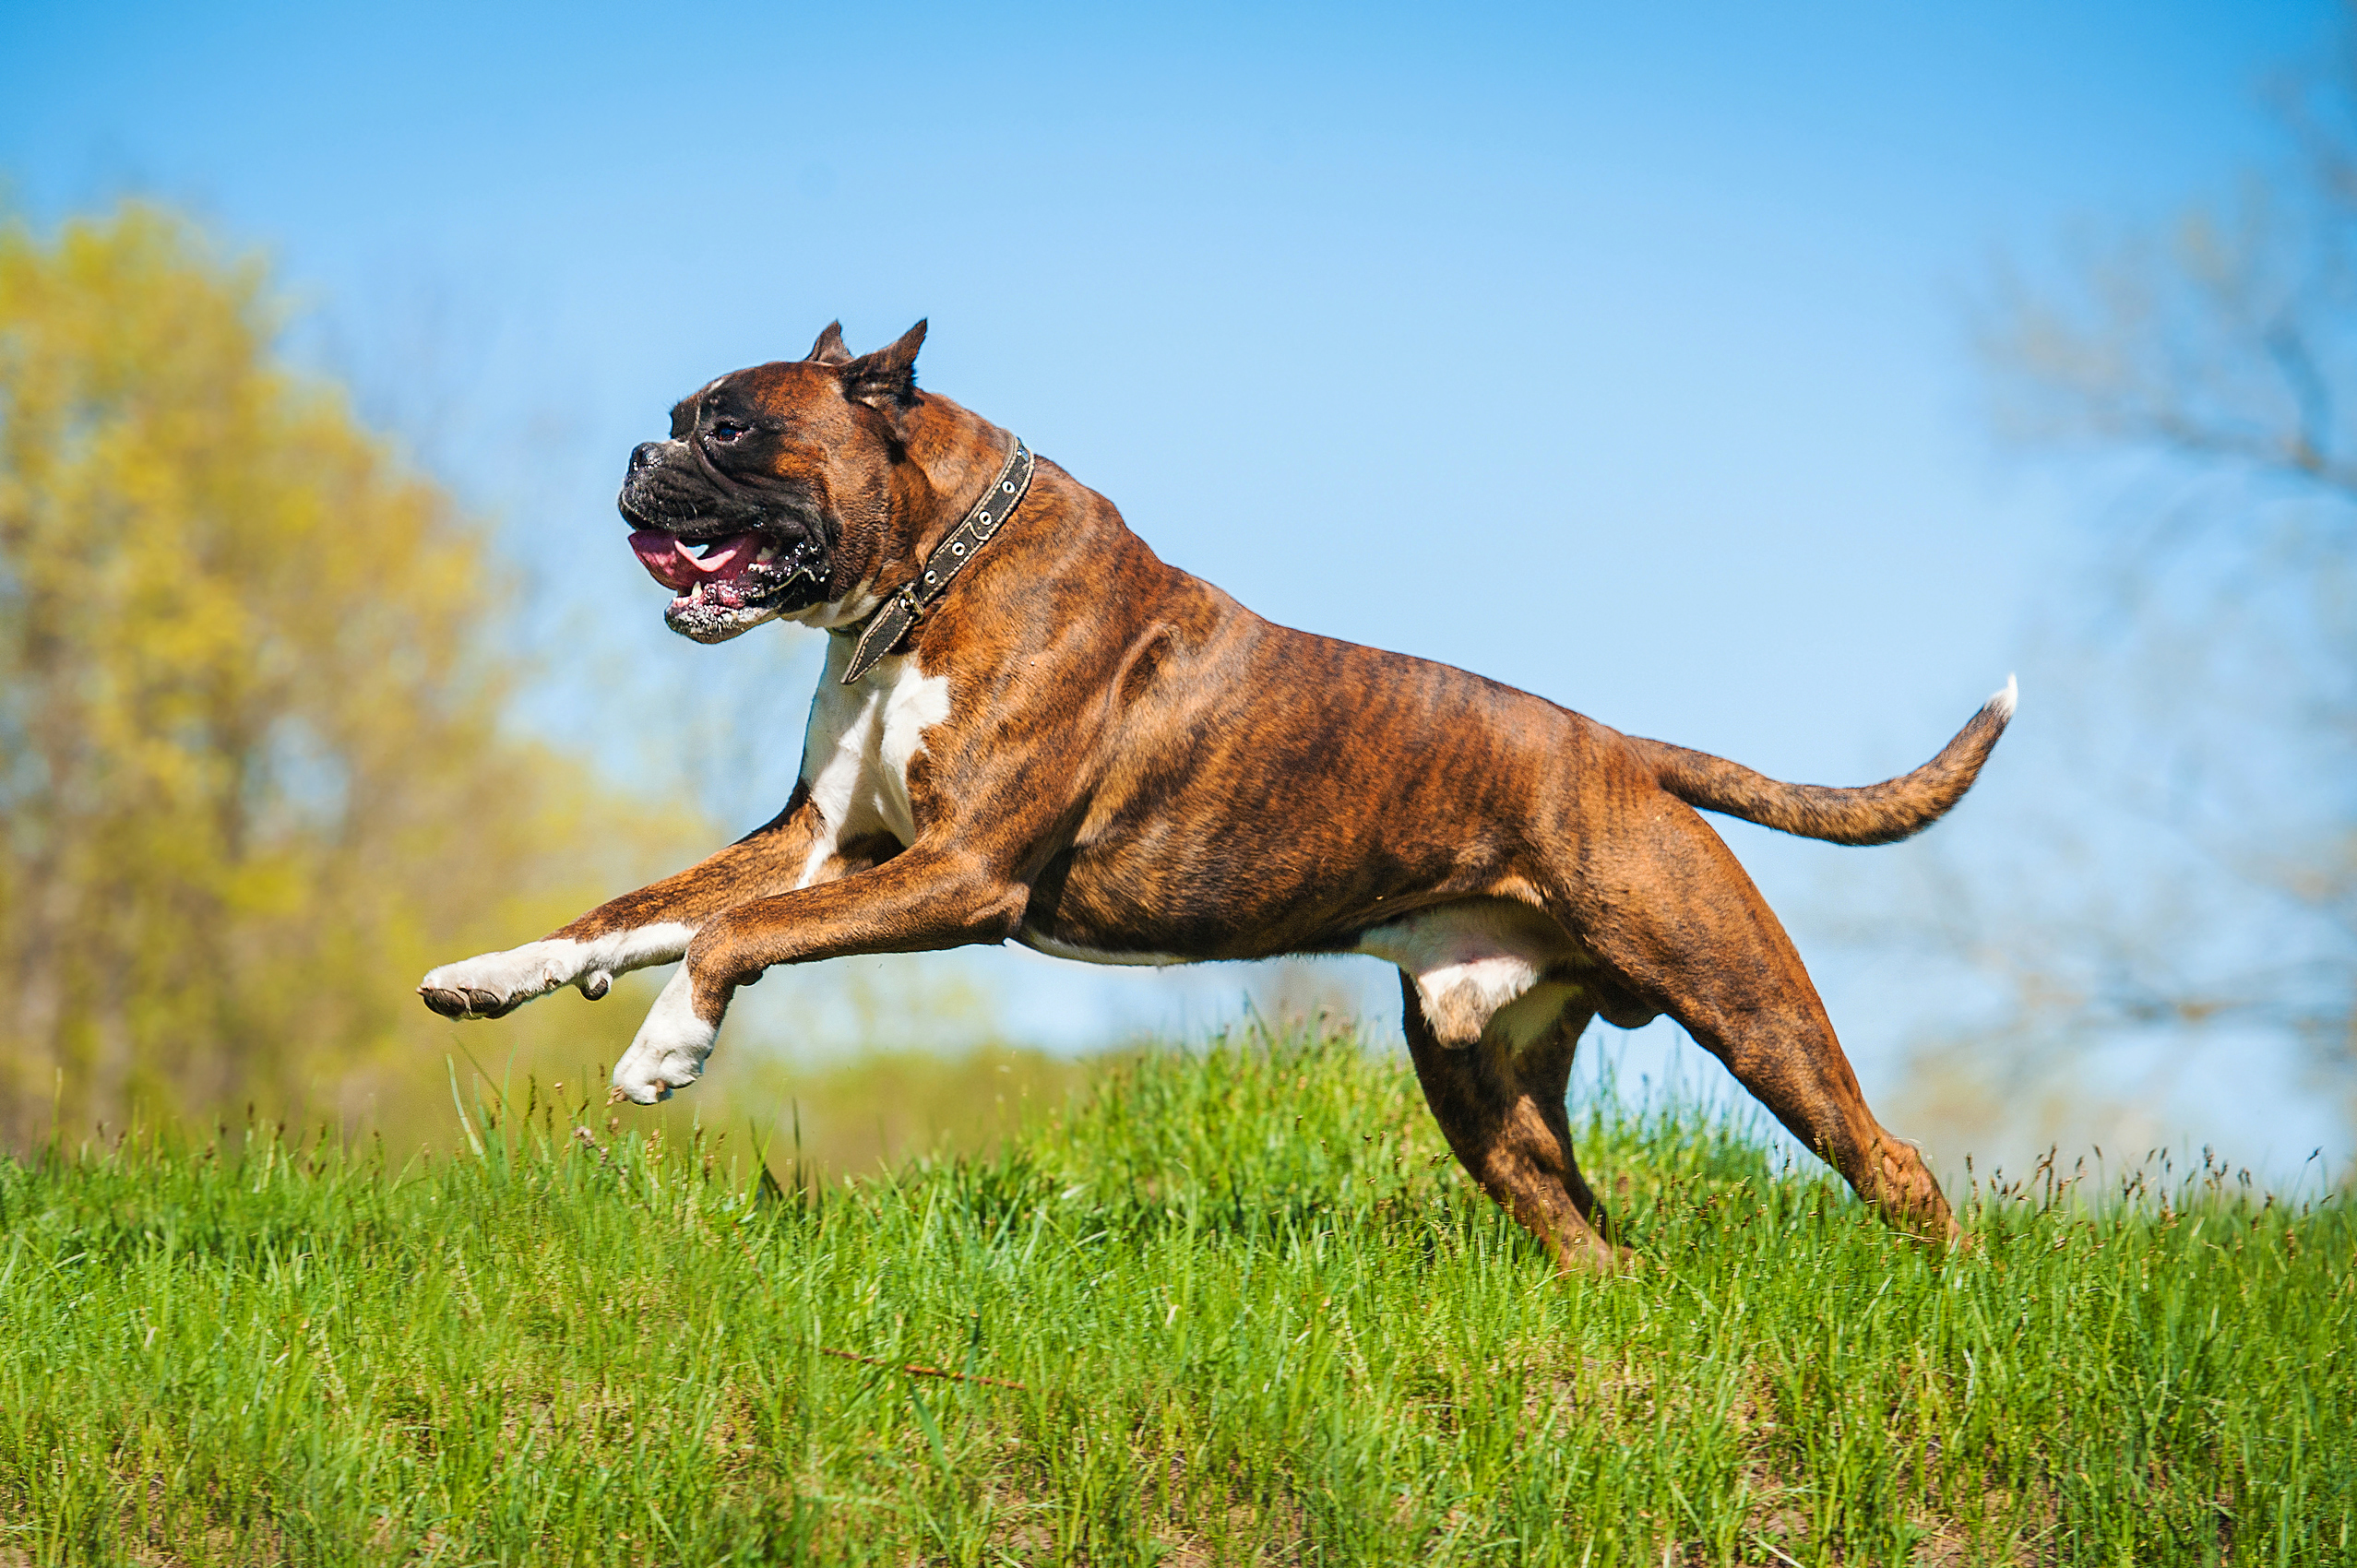 Boxer (dog) jumping through air